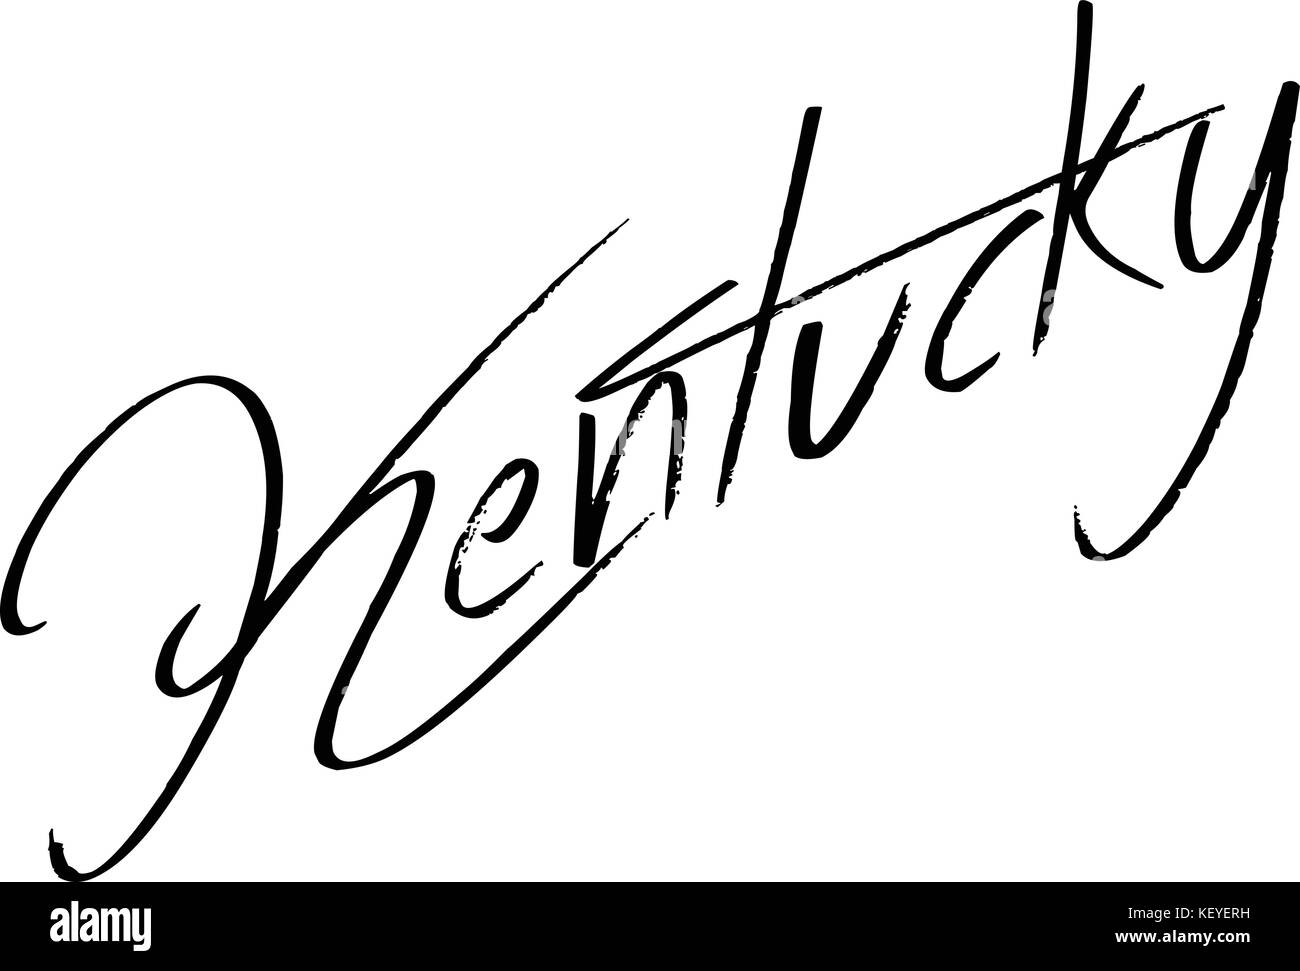 Kentucky text sign illustration on white bakground Stock Vector